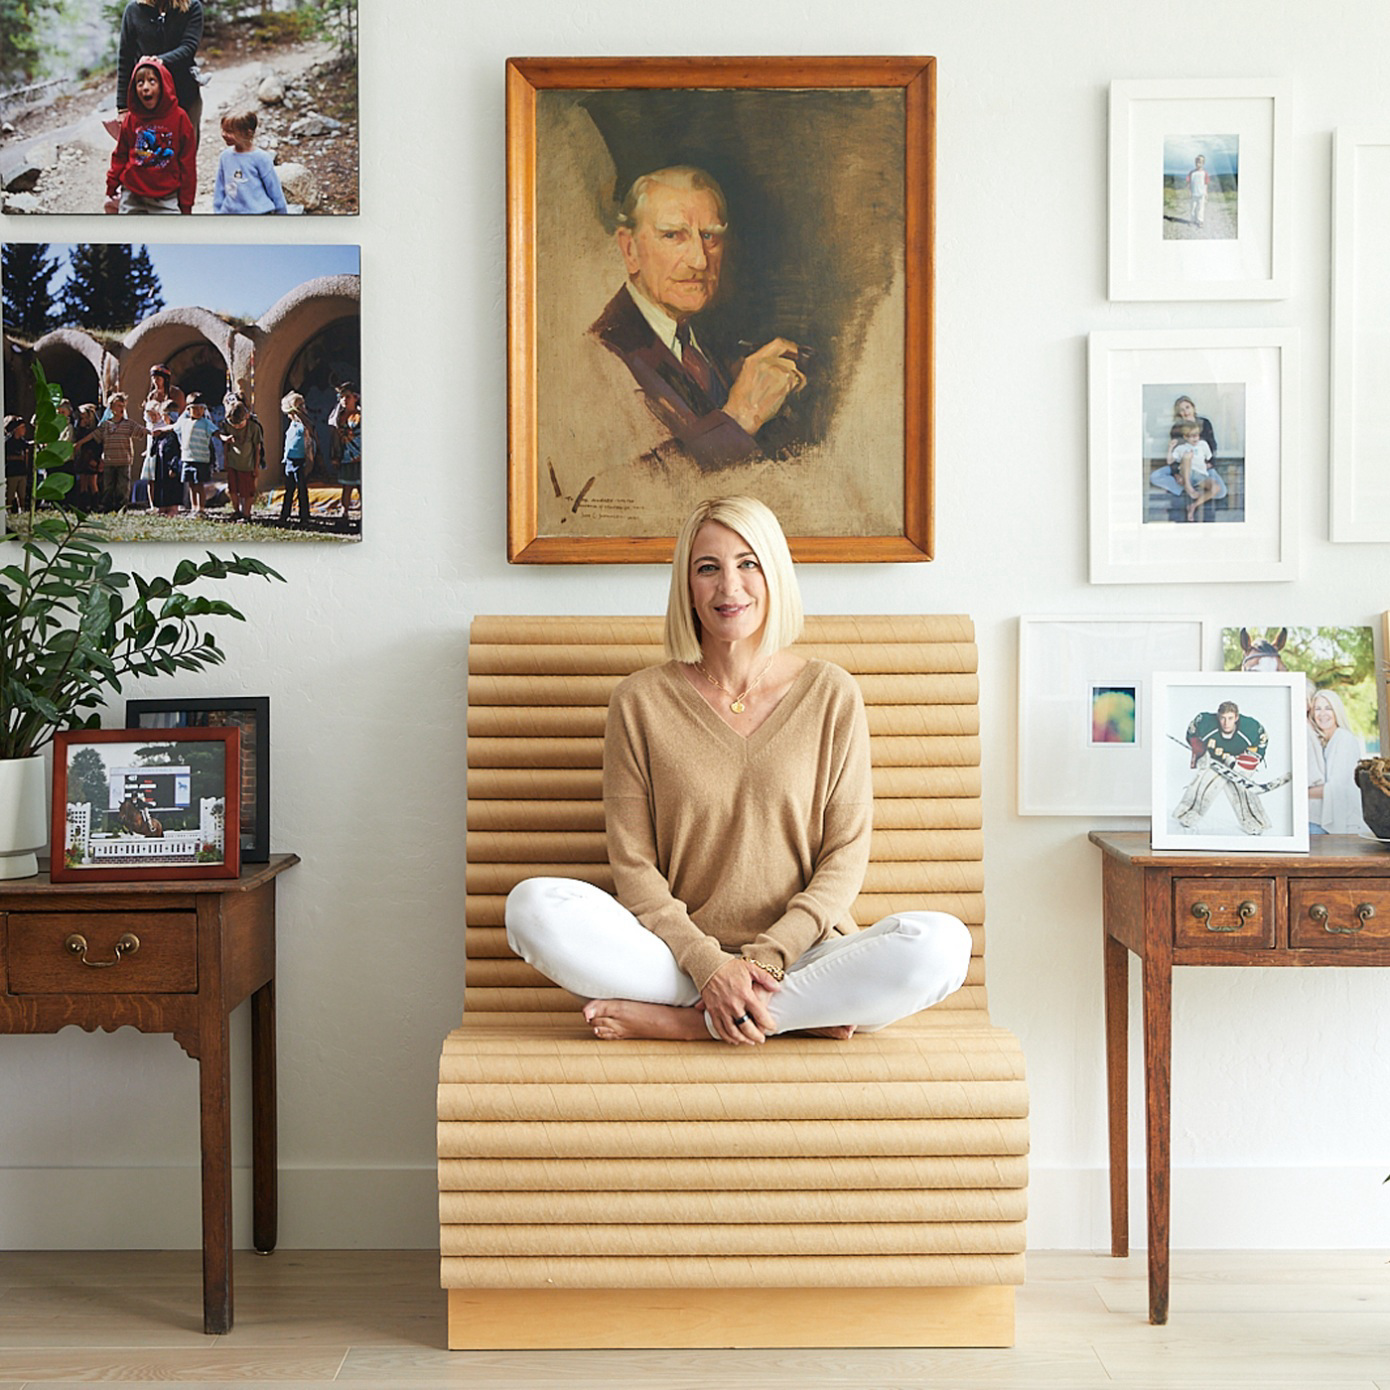 Heidi Zuckerman sitting on a wooden chair.